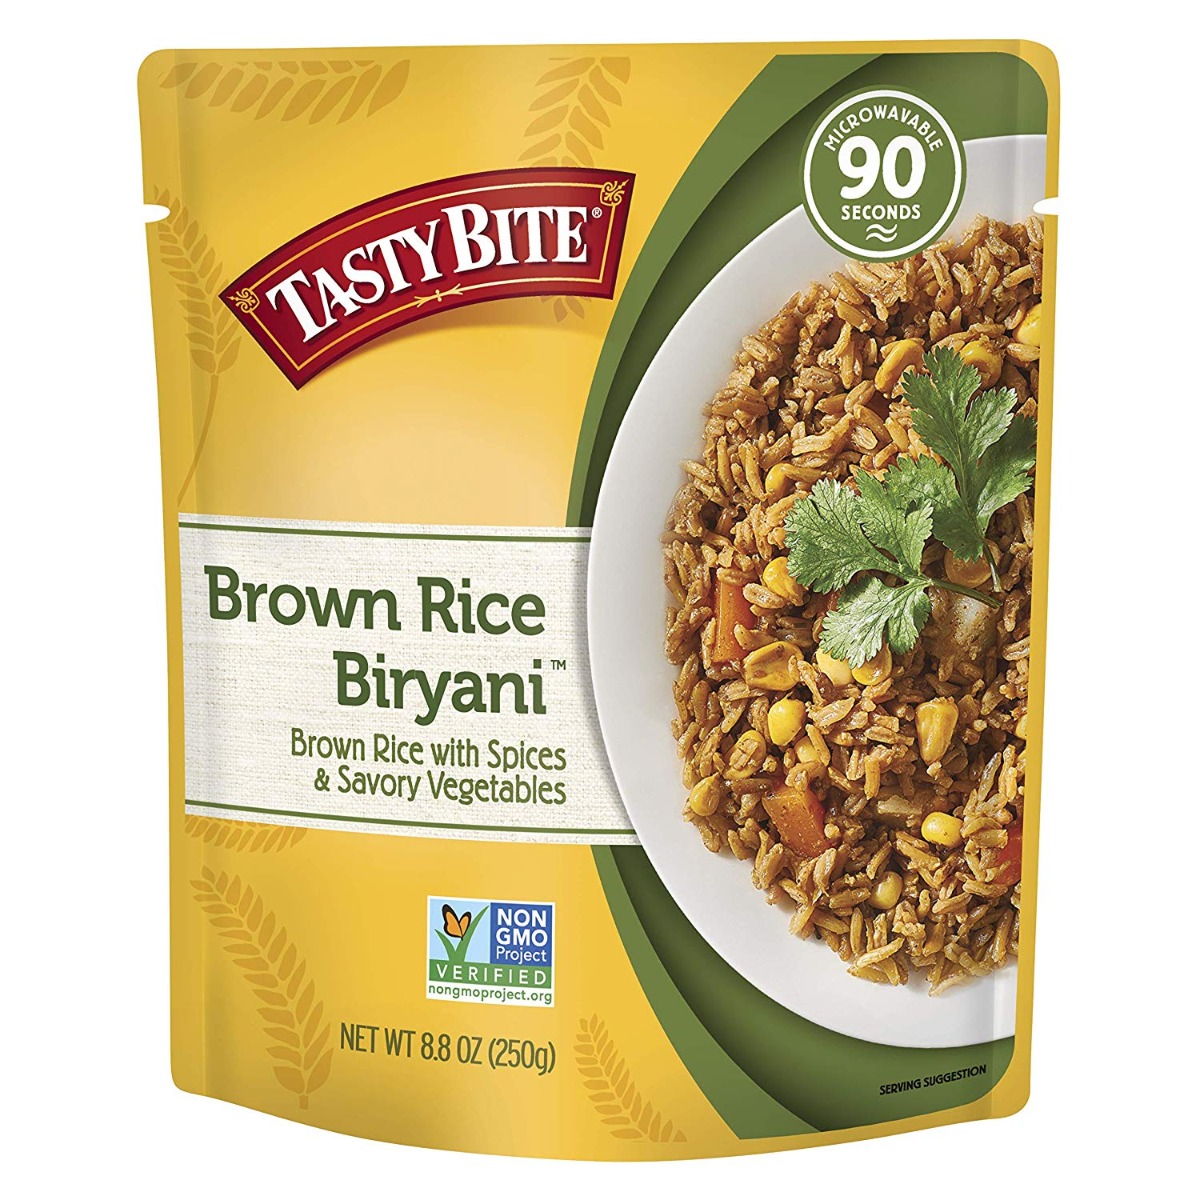 Brown Rice Biryani - brown